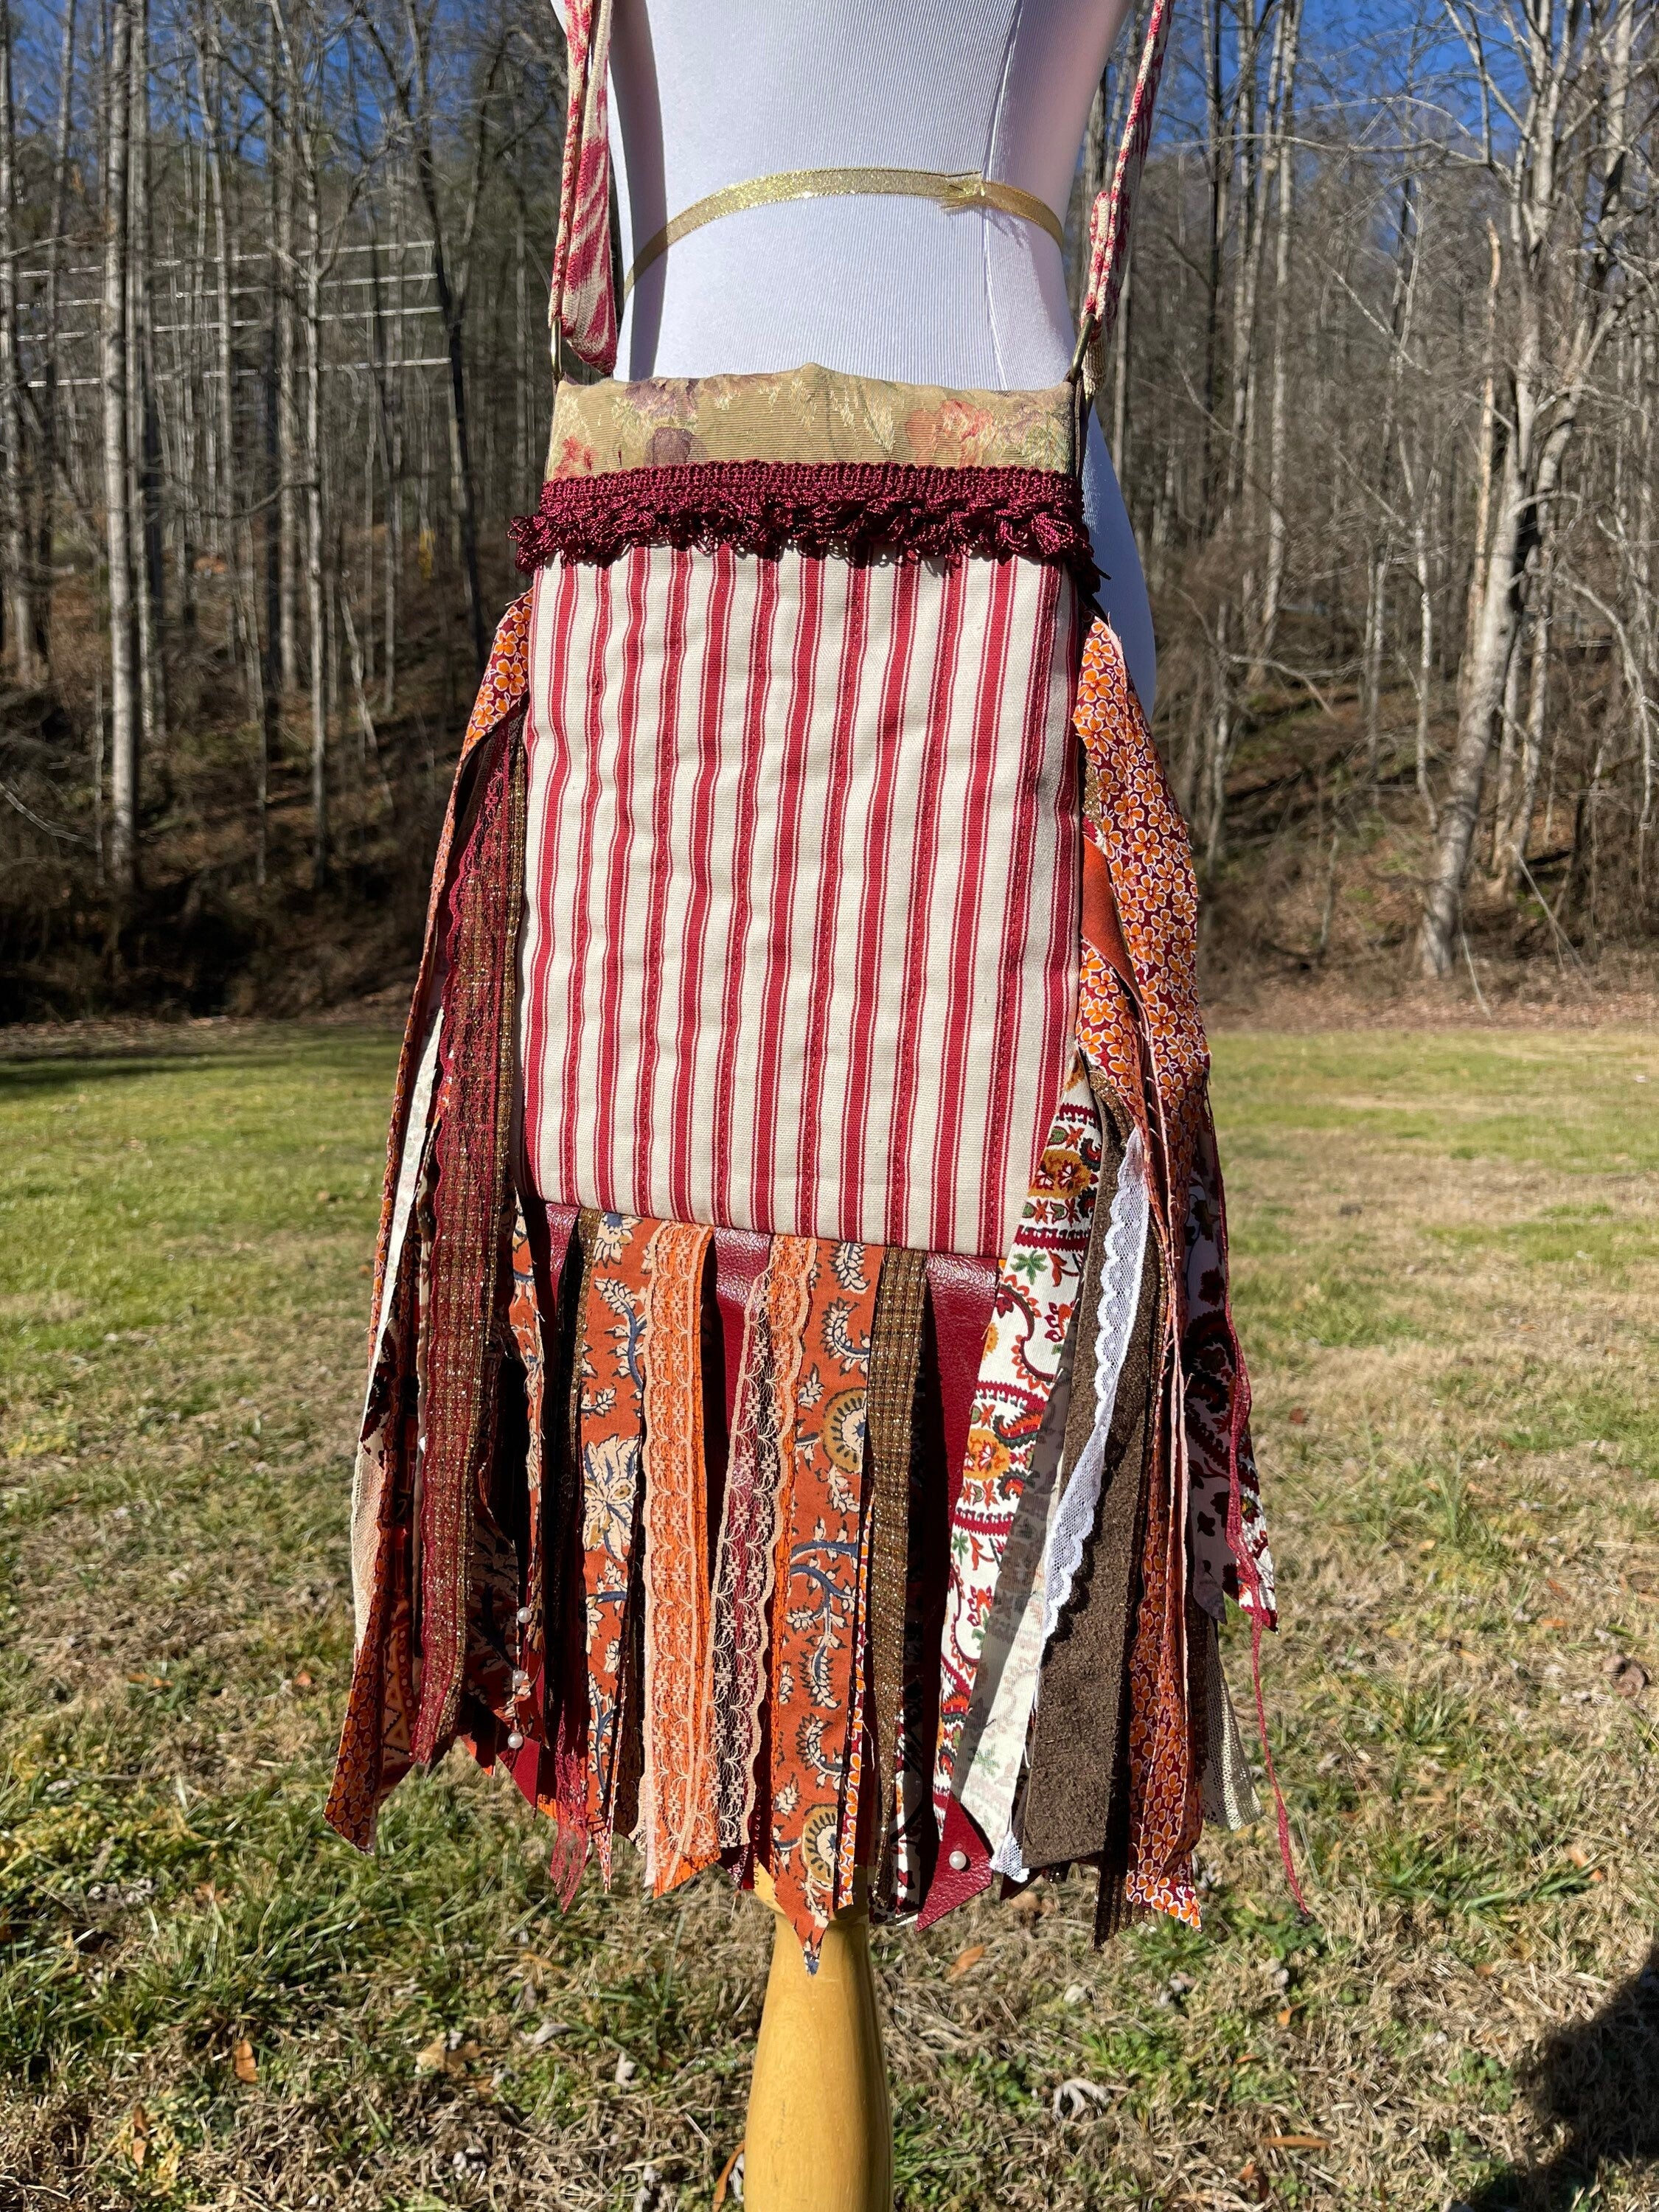 Native American - Hippie Crossbody Bag